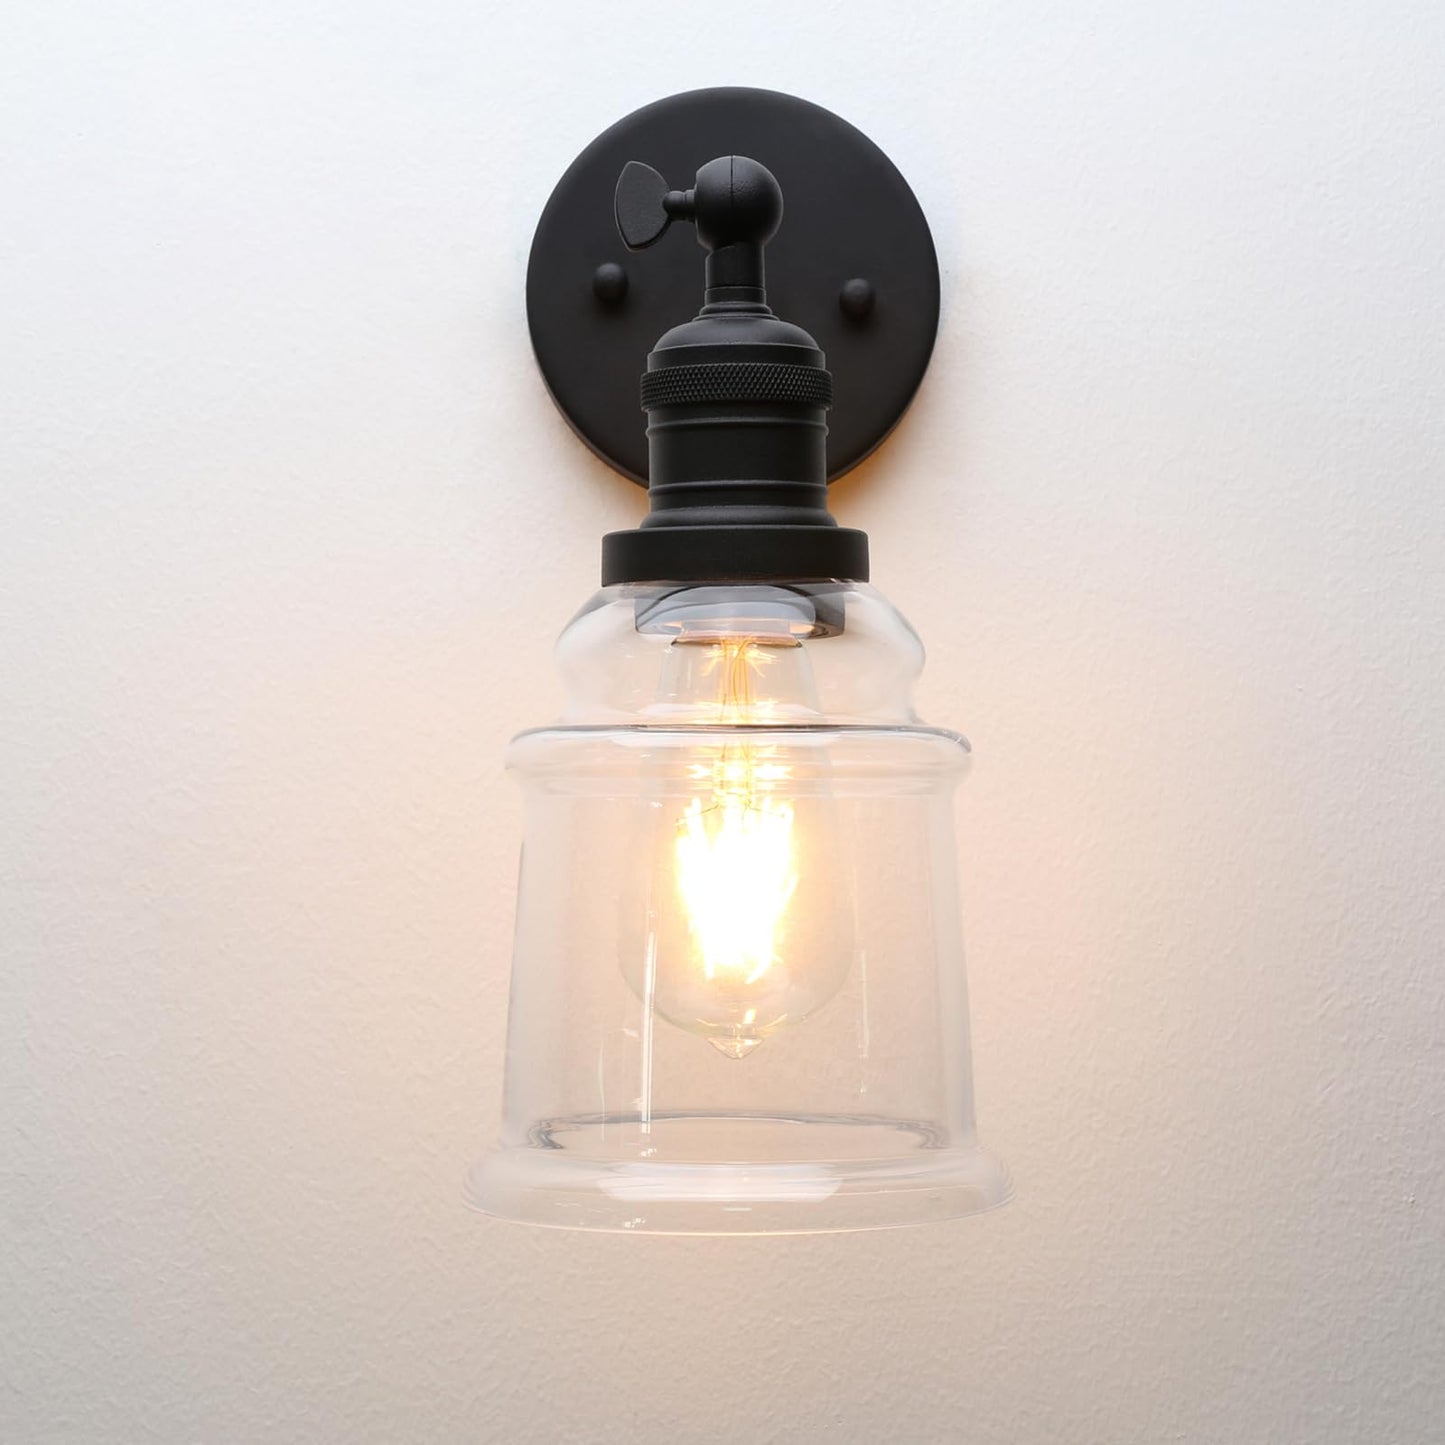 Vintage Wall Sconce Light, Classic Wall Vanity Lighting